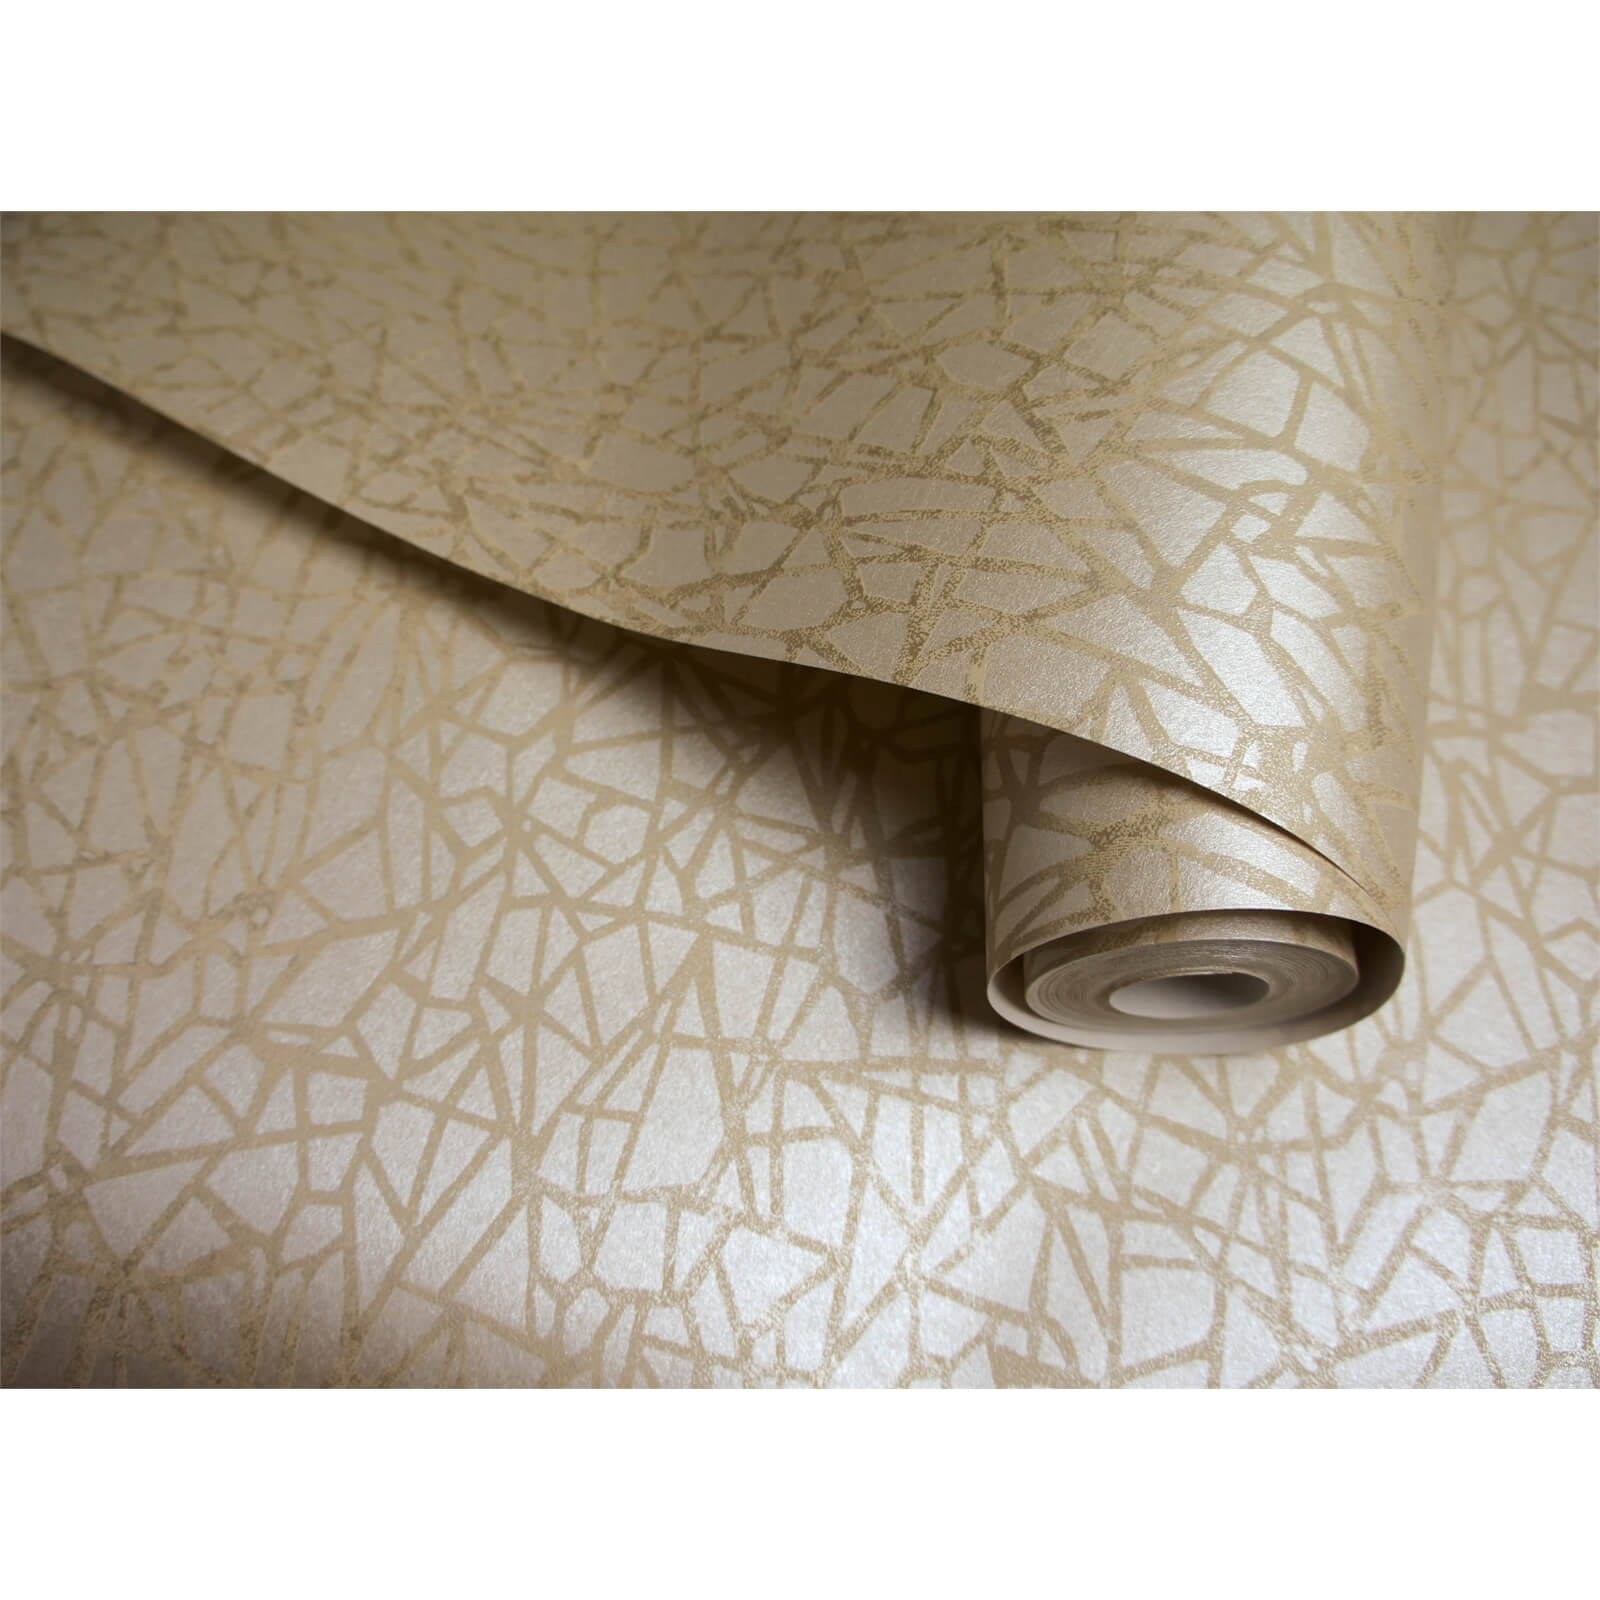 Holden Decor Sakkara Geometric Textured Metallic Cream Wallpaper